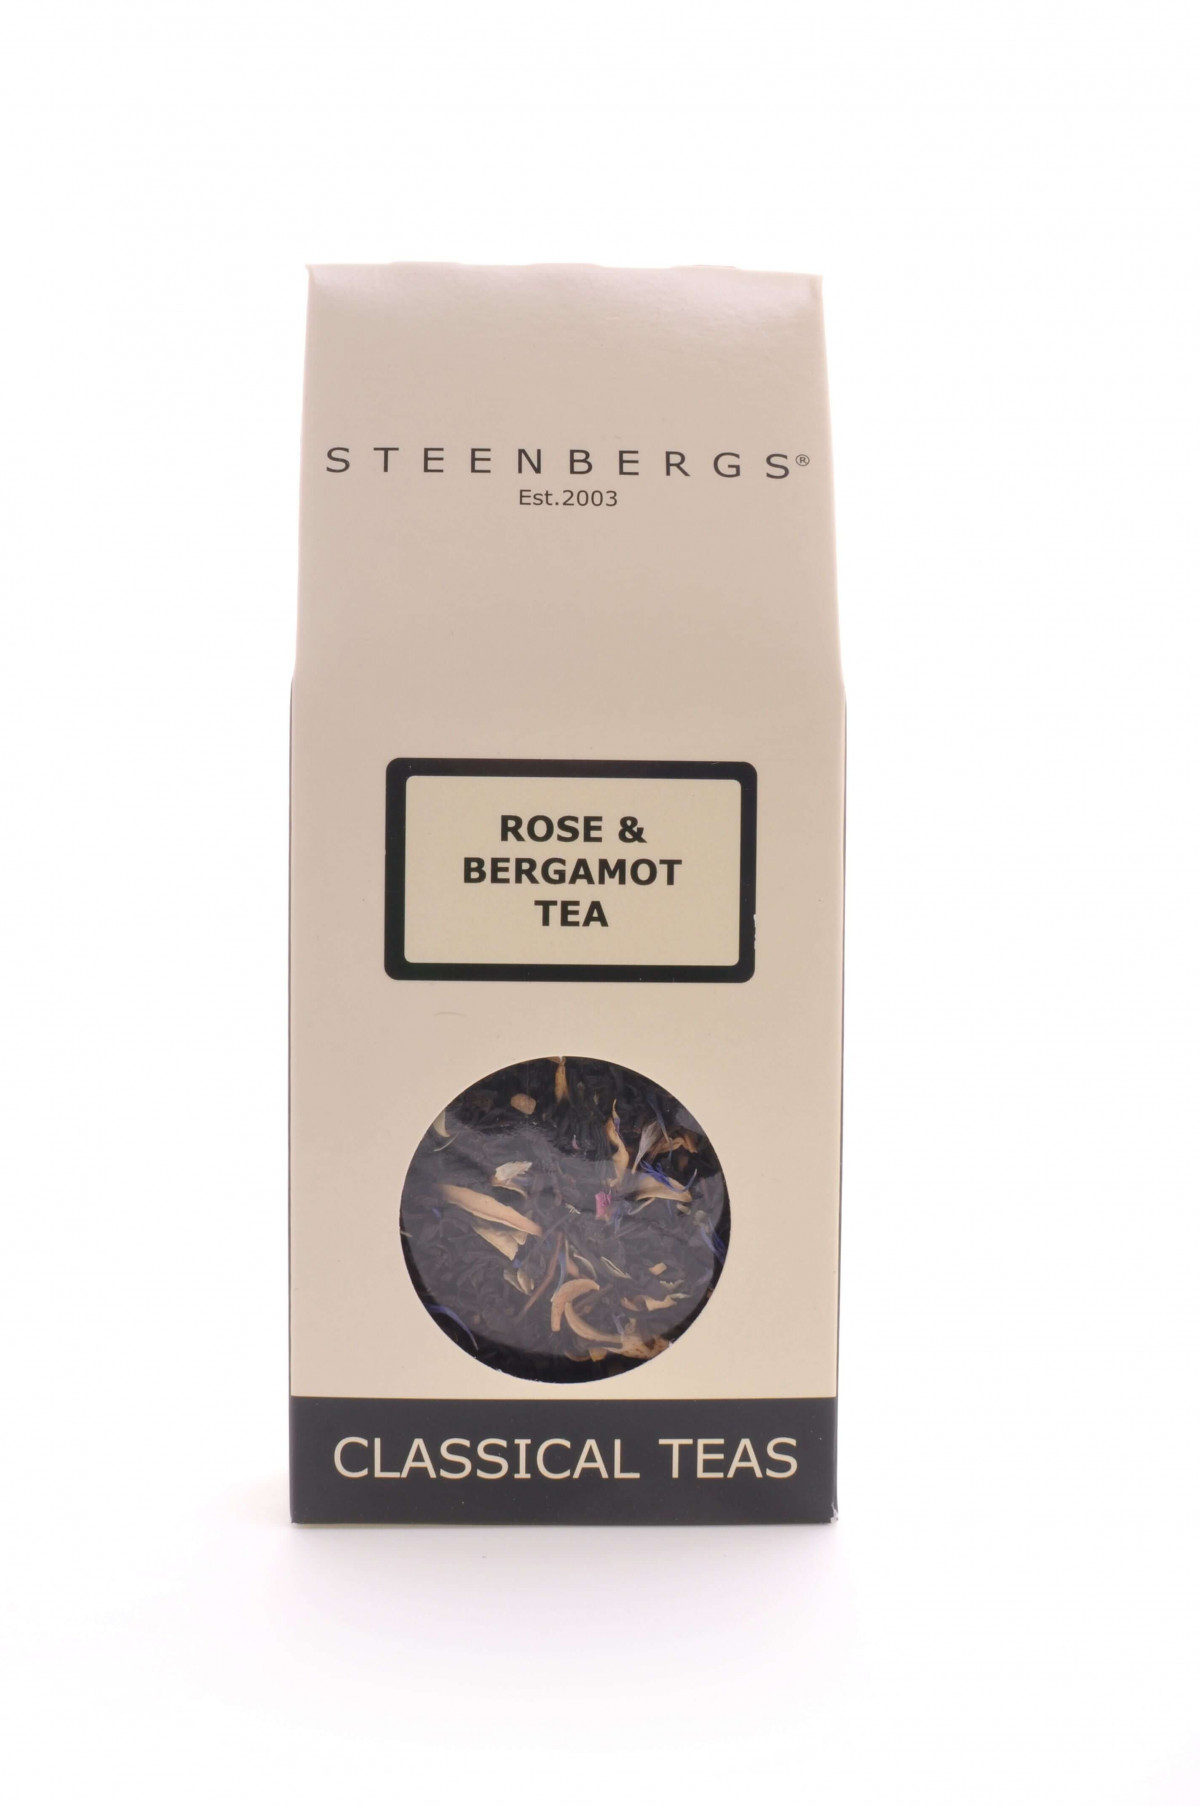 Steenbergs Rose & Bergamot tea